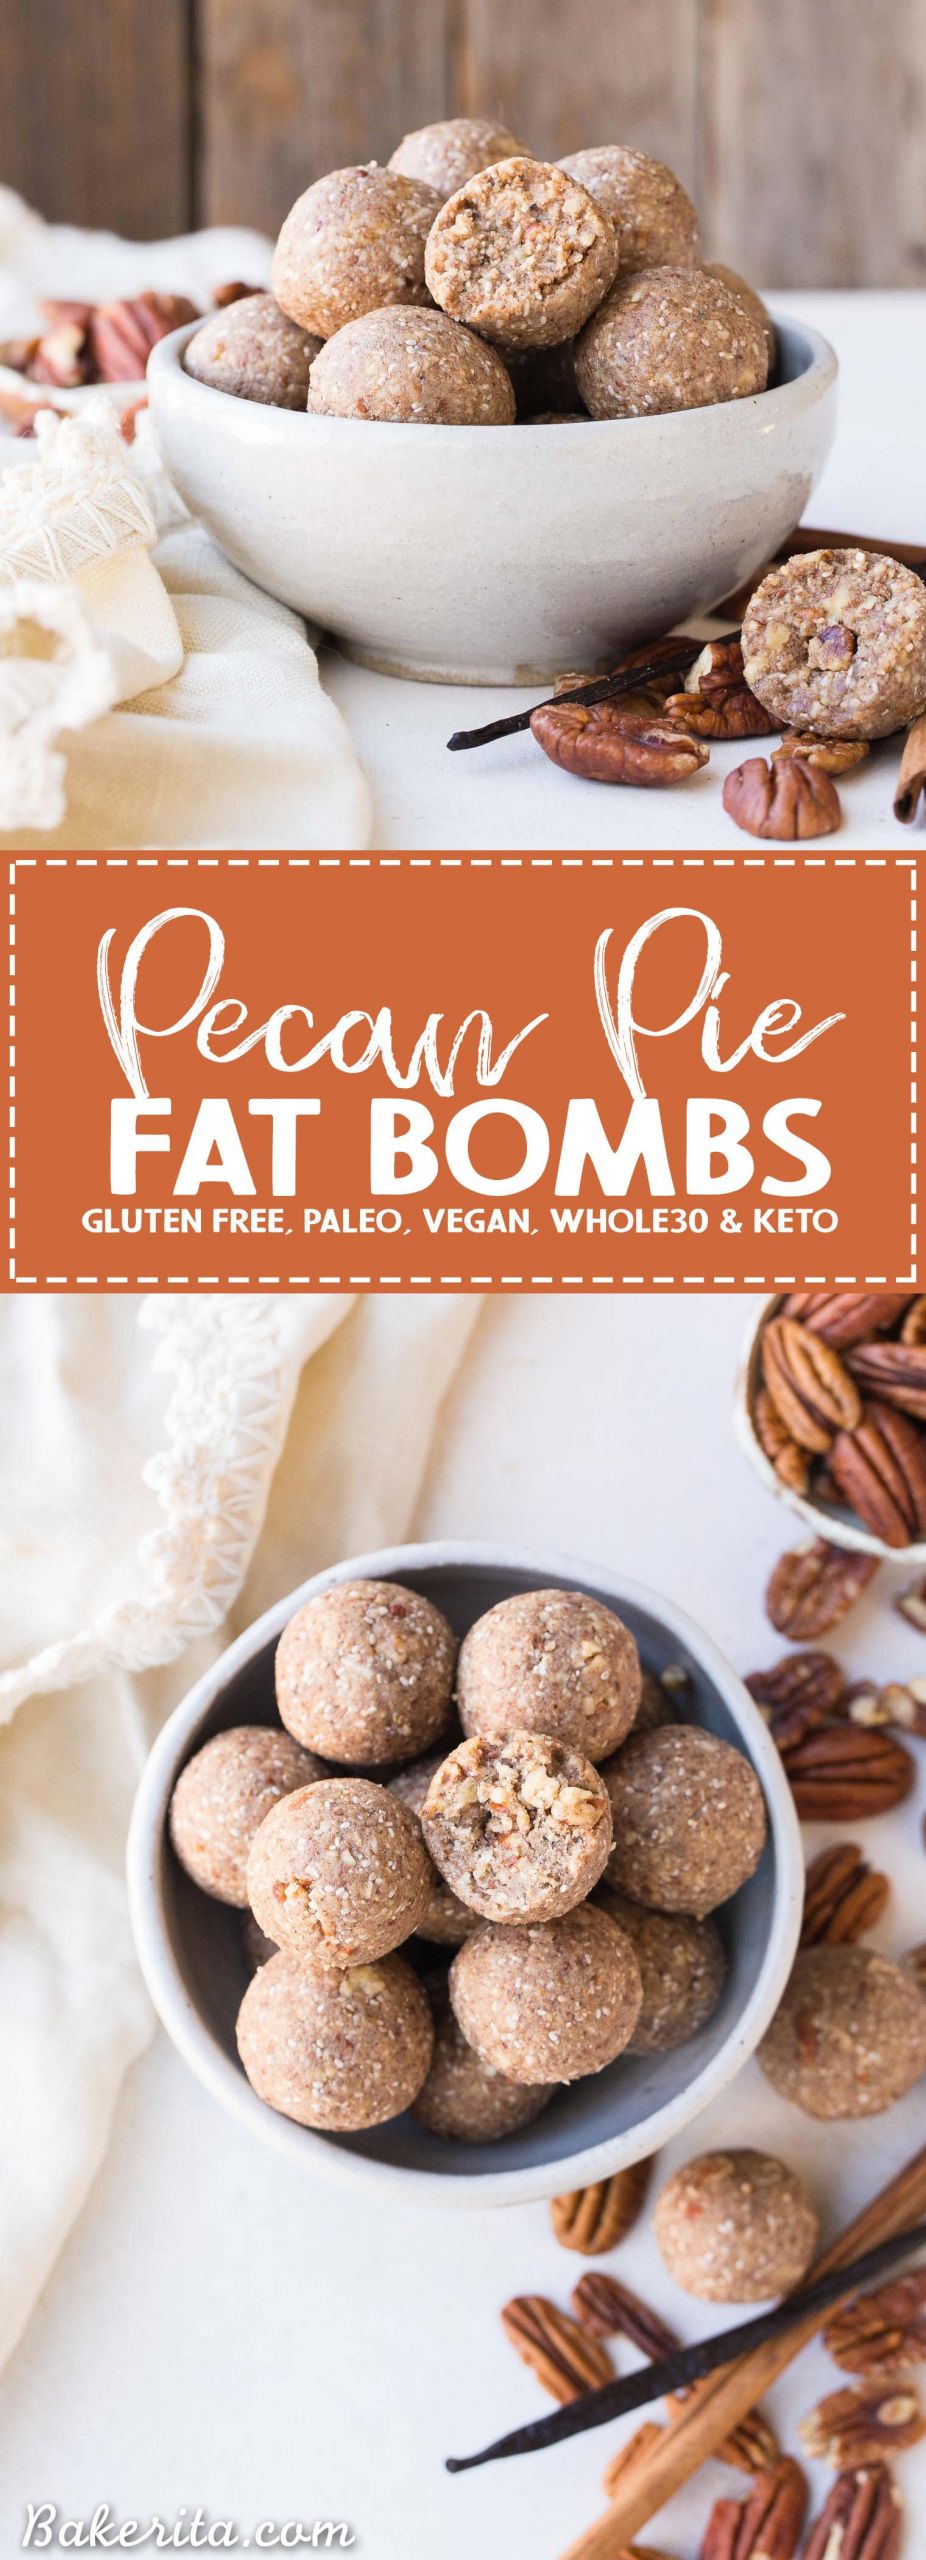 Vegan Keto Fat Boms
 Pecan Pie Fat Bombs Gluten Free Paleo Vegan & Keto